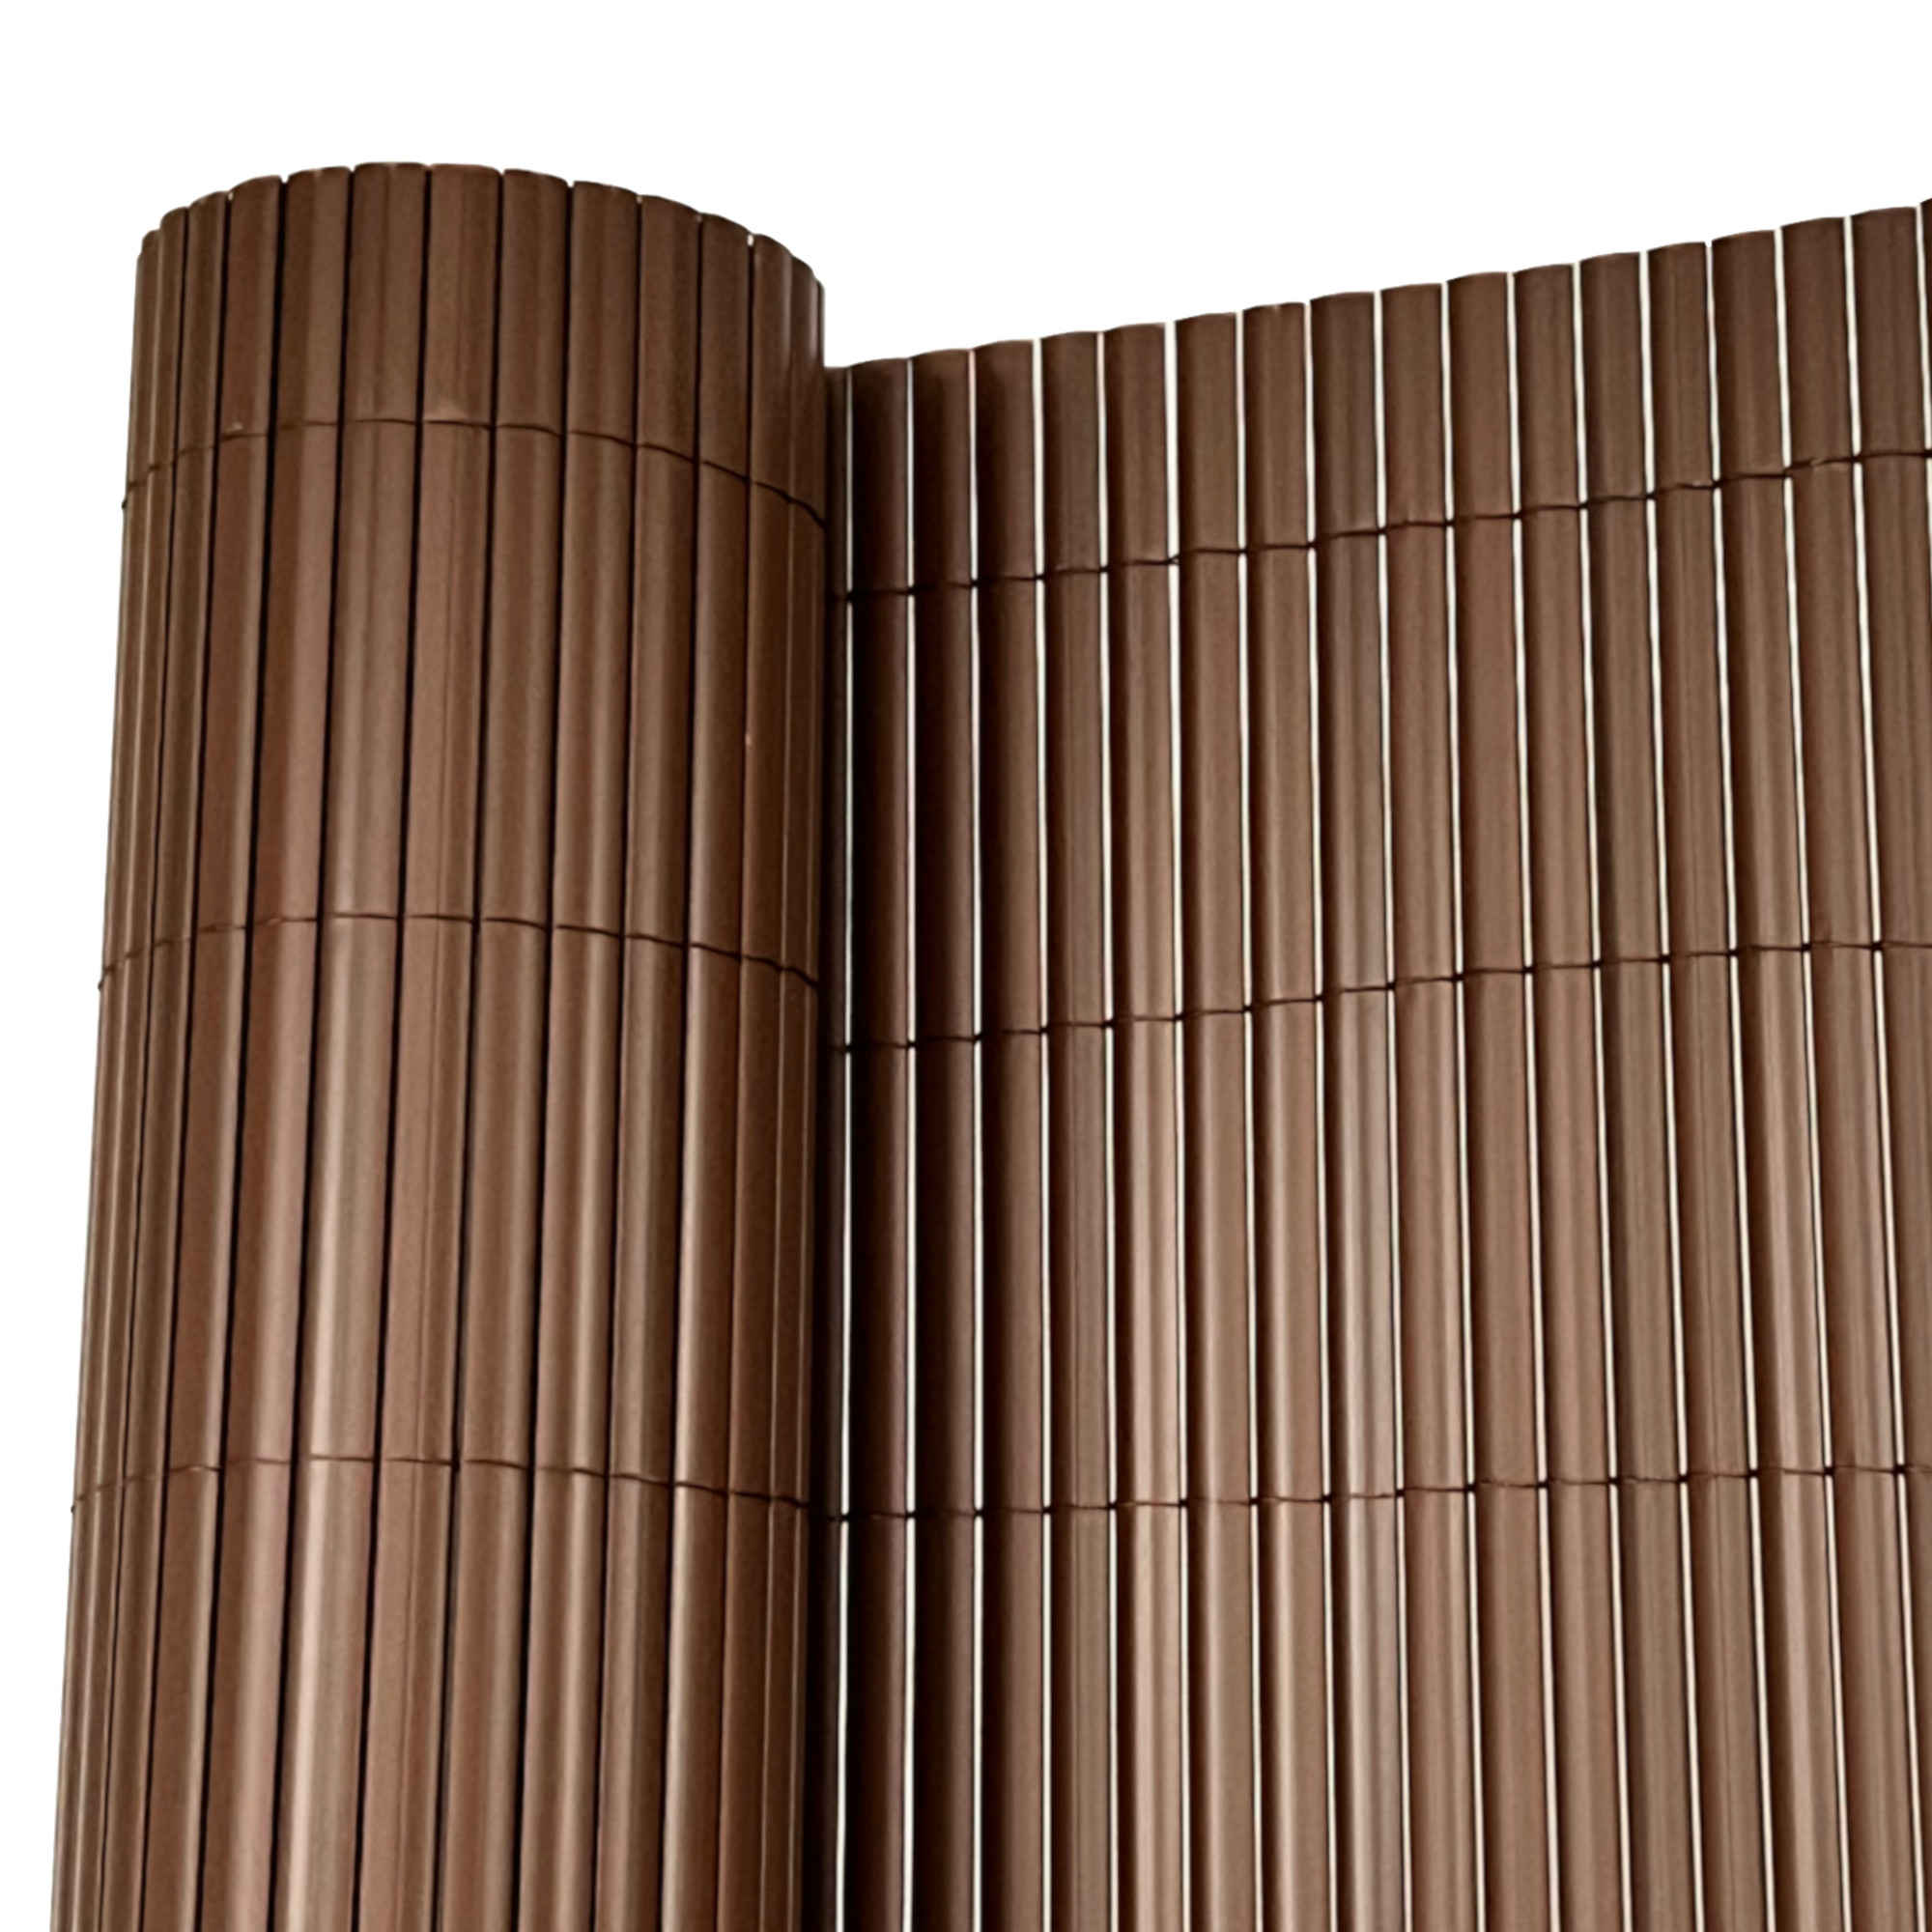 5m x 1.2m PVC Fencing (Brown)